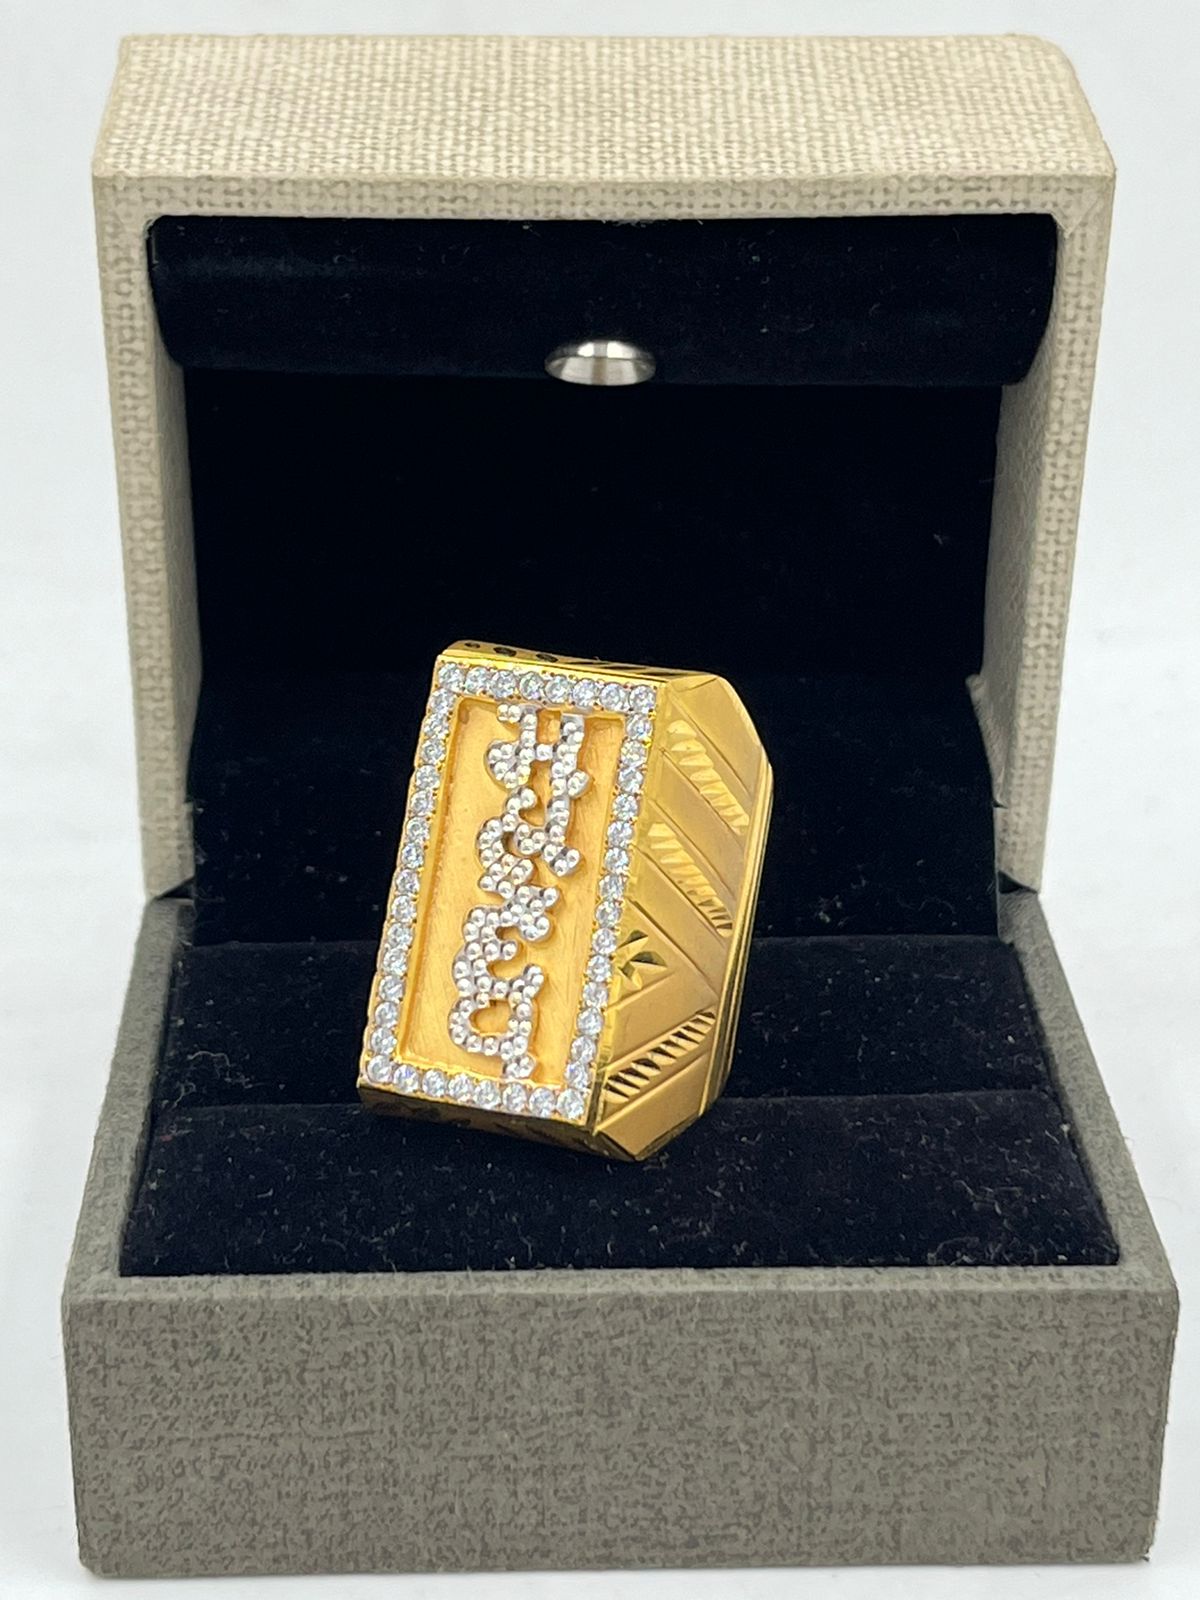 Gold Wedding Ring Box Image & Photo (Free Trial) | Bigstock